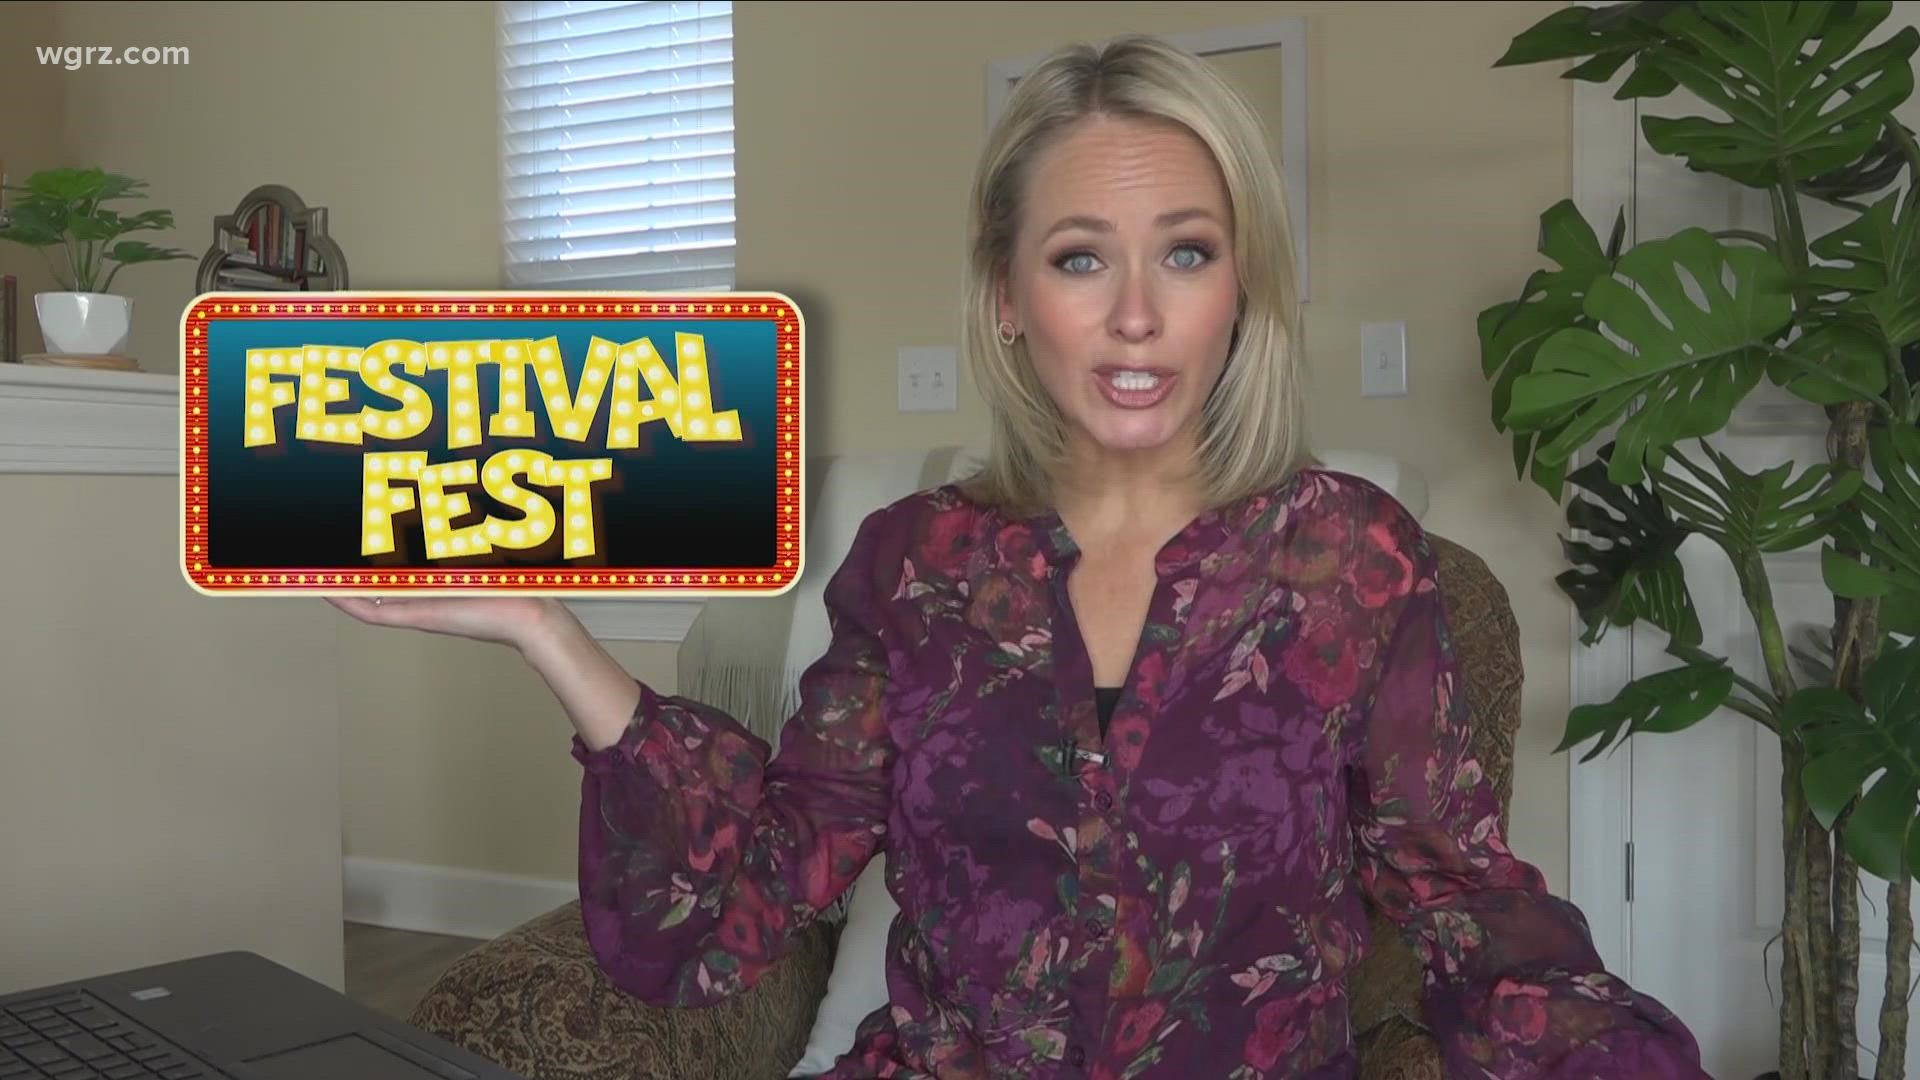 Most Buffalo: Festival Fest